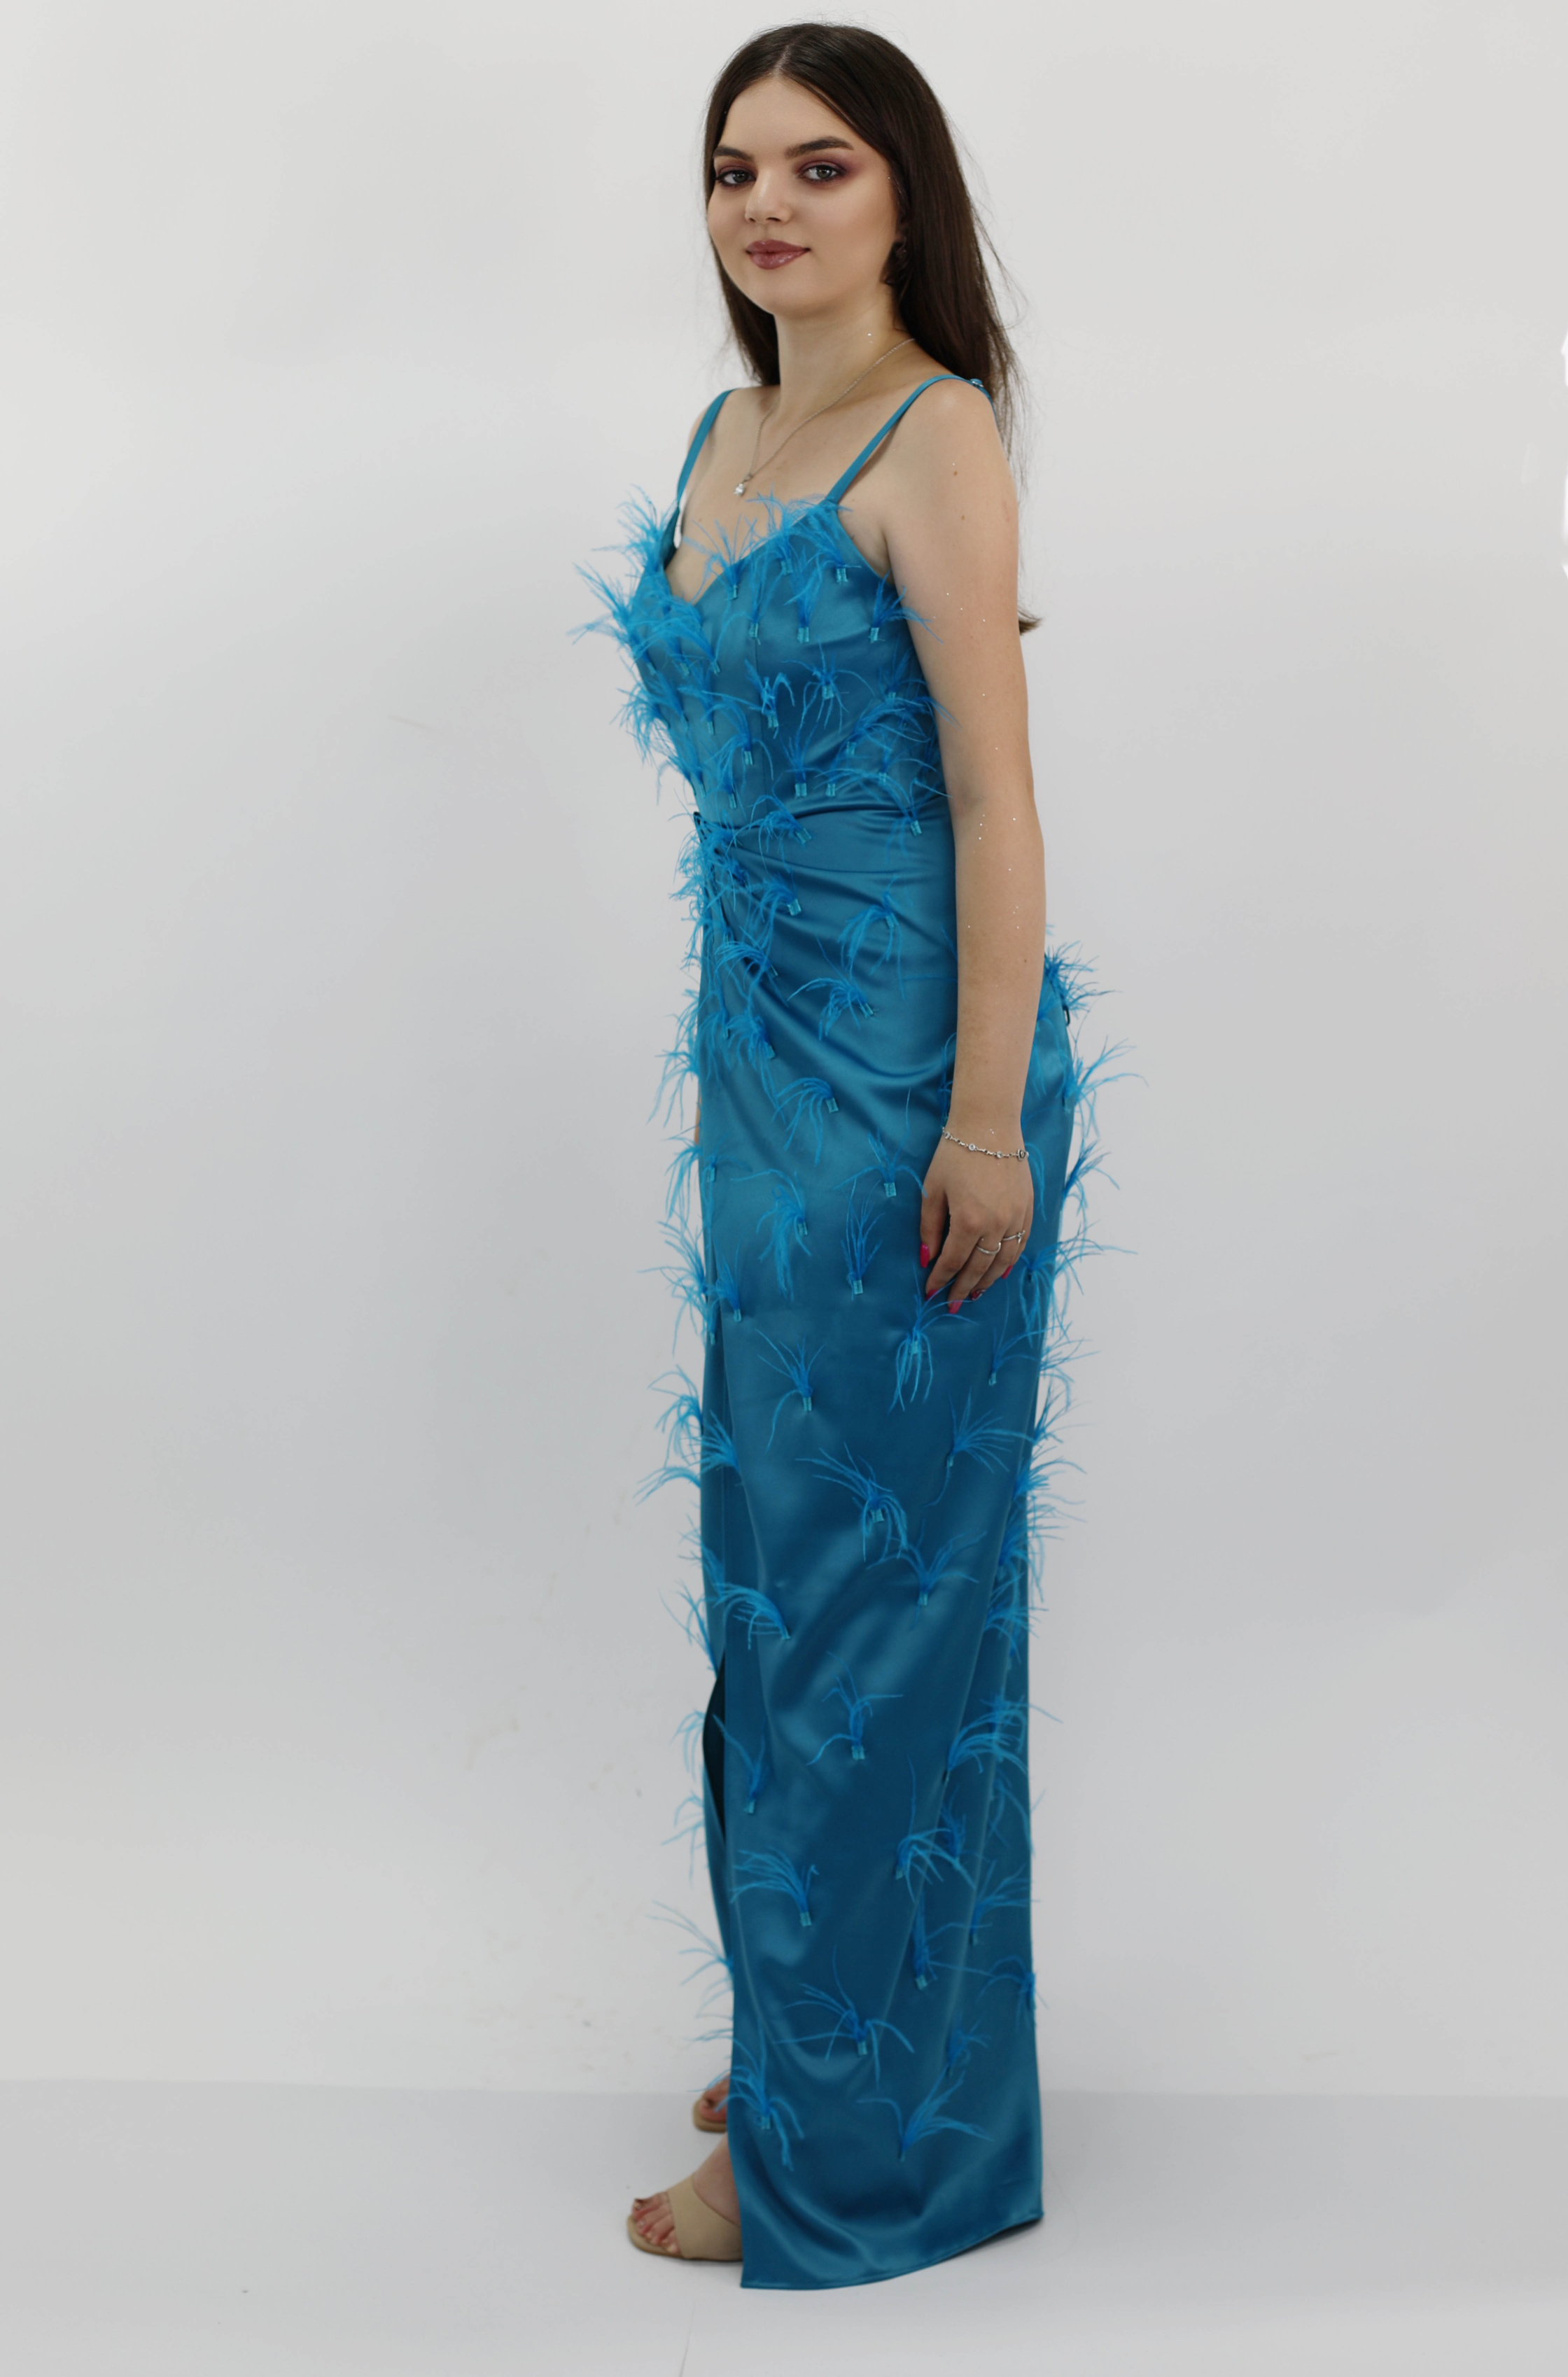 R24107 - TURQUOISE 05 - EZRA turquoise long dress with feathers - AMBAR STUDIO